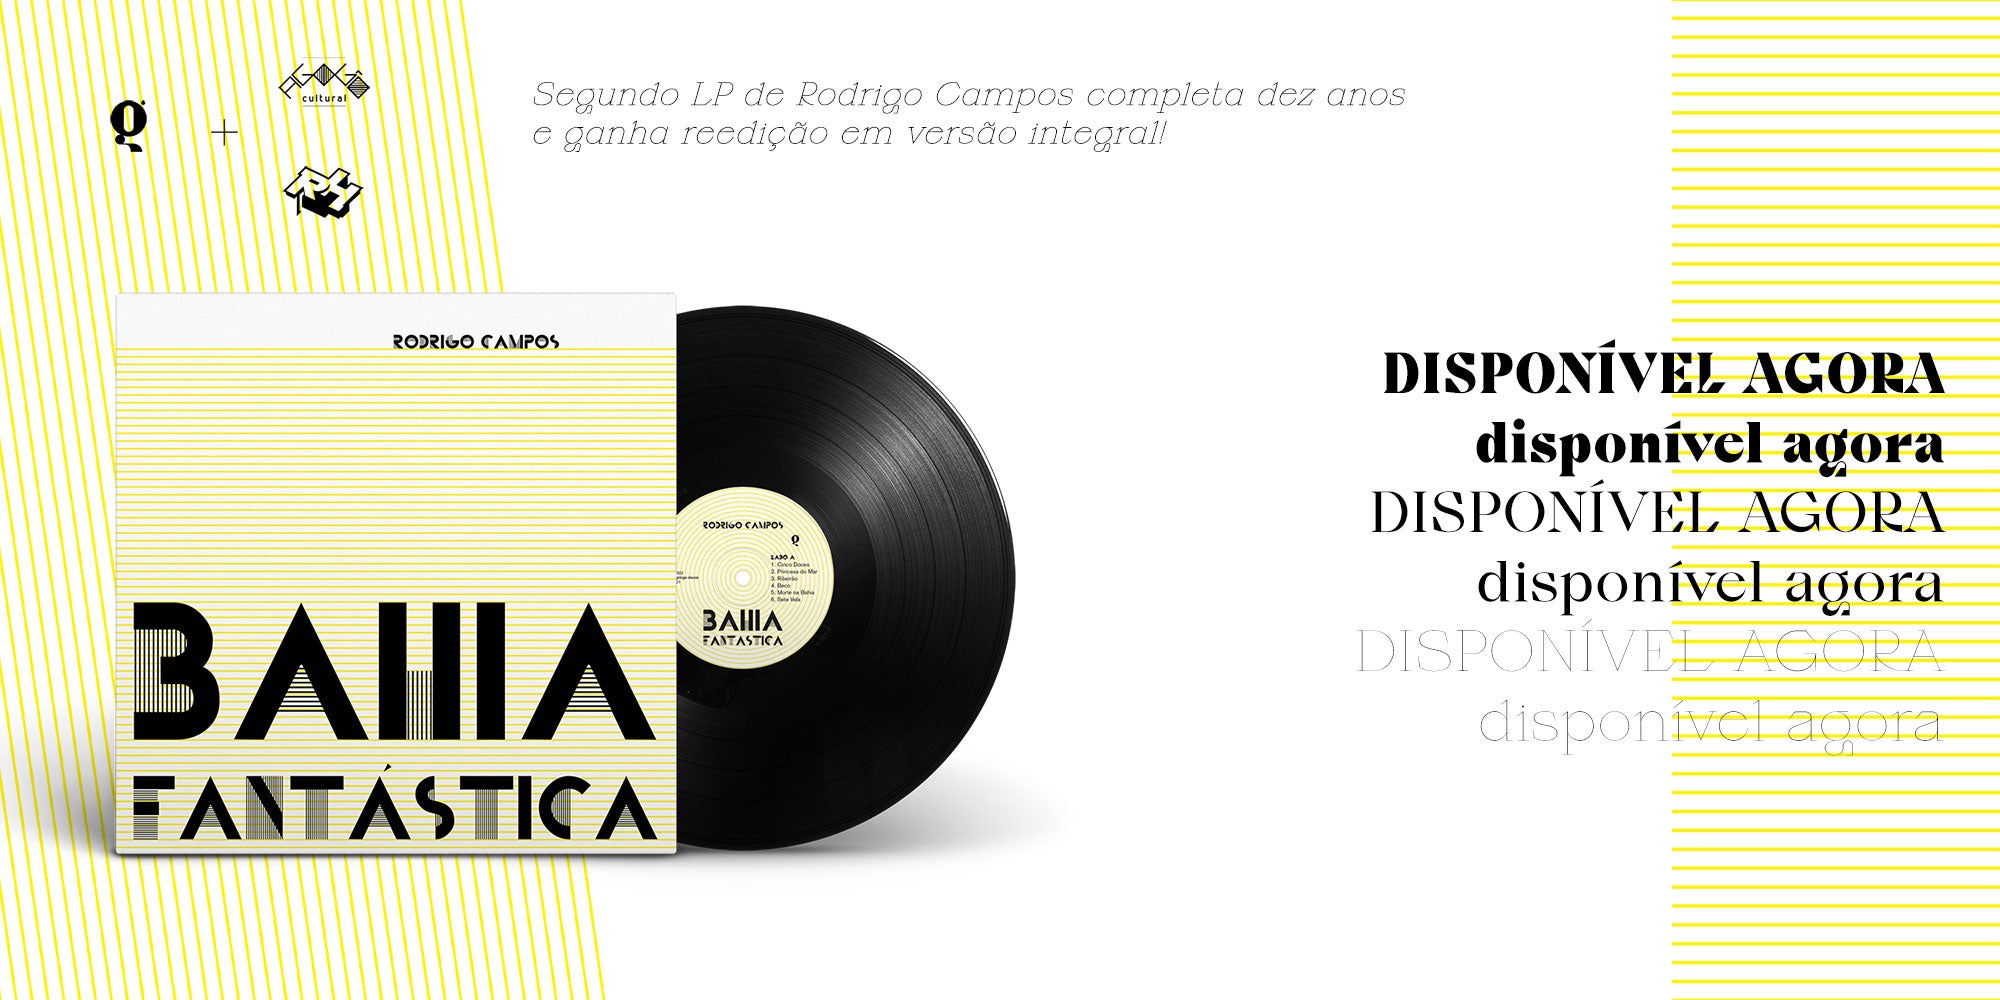 goma gringa discos rodrigo campos bahia fantastica lp vinil vinyl record collection rush hour agogo cultural musica brasileira brazilian music mpb sao paulo